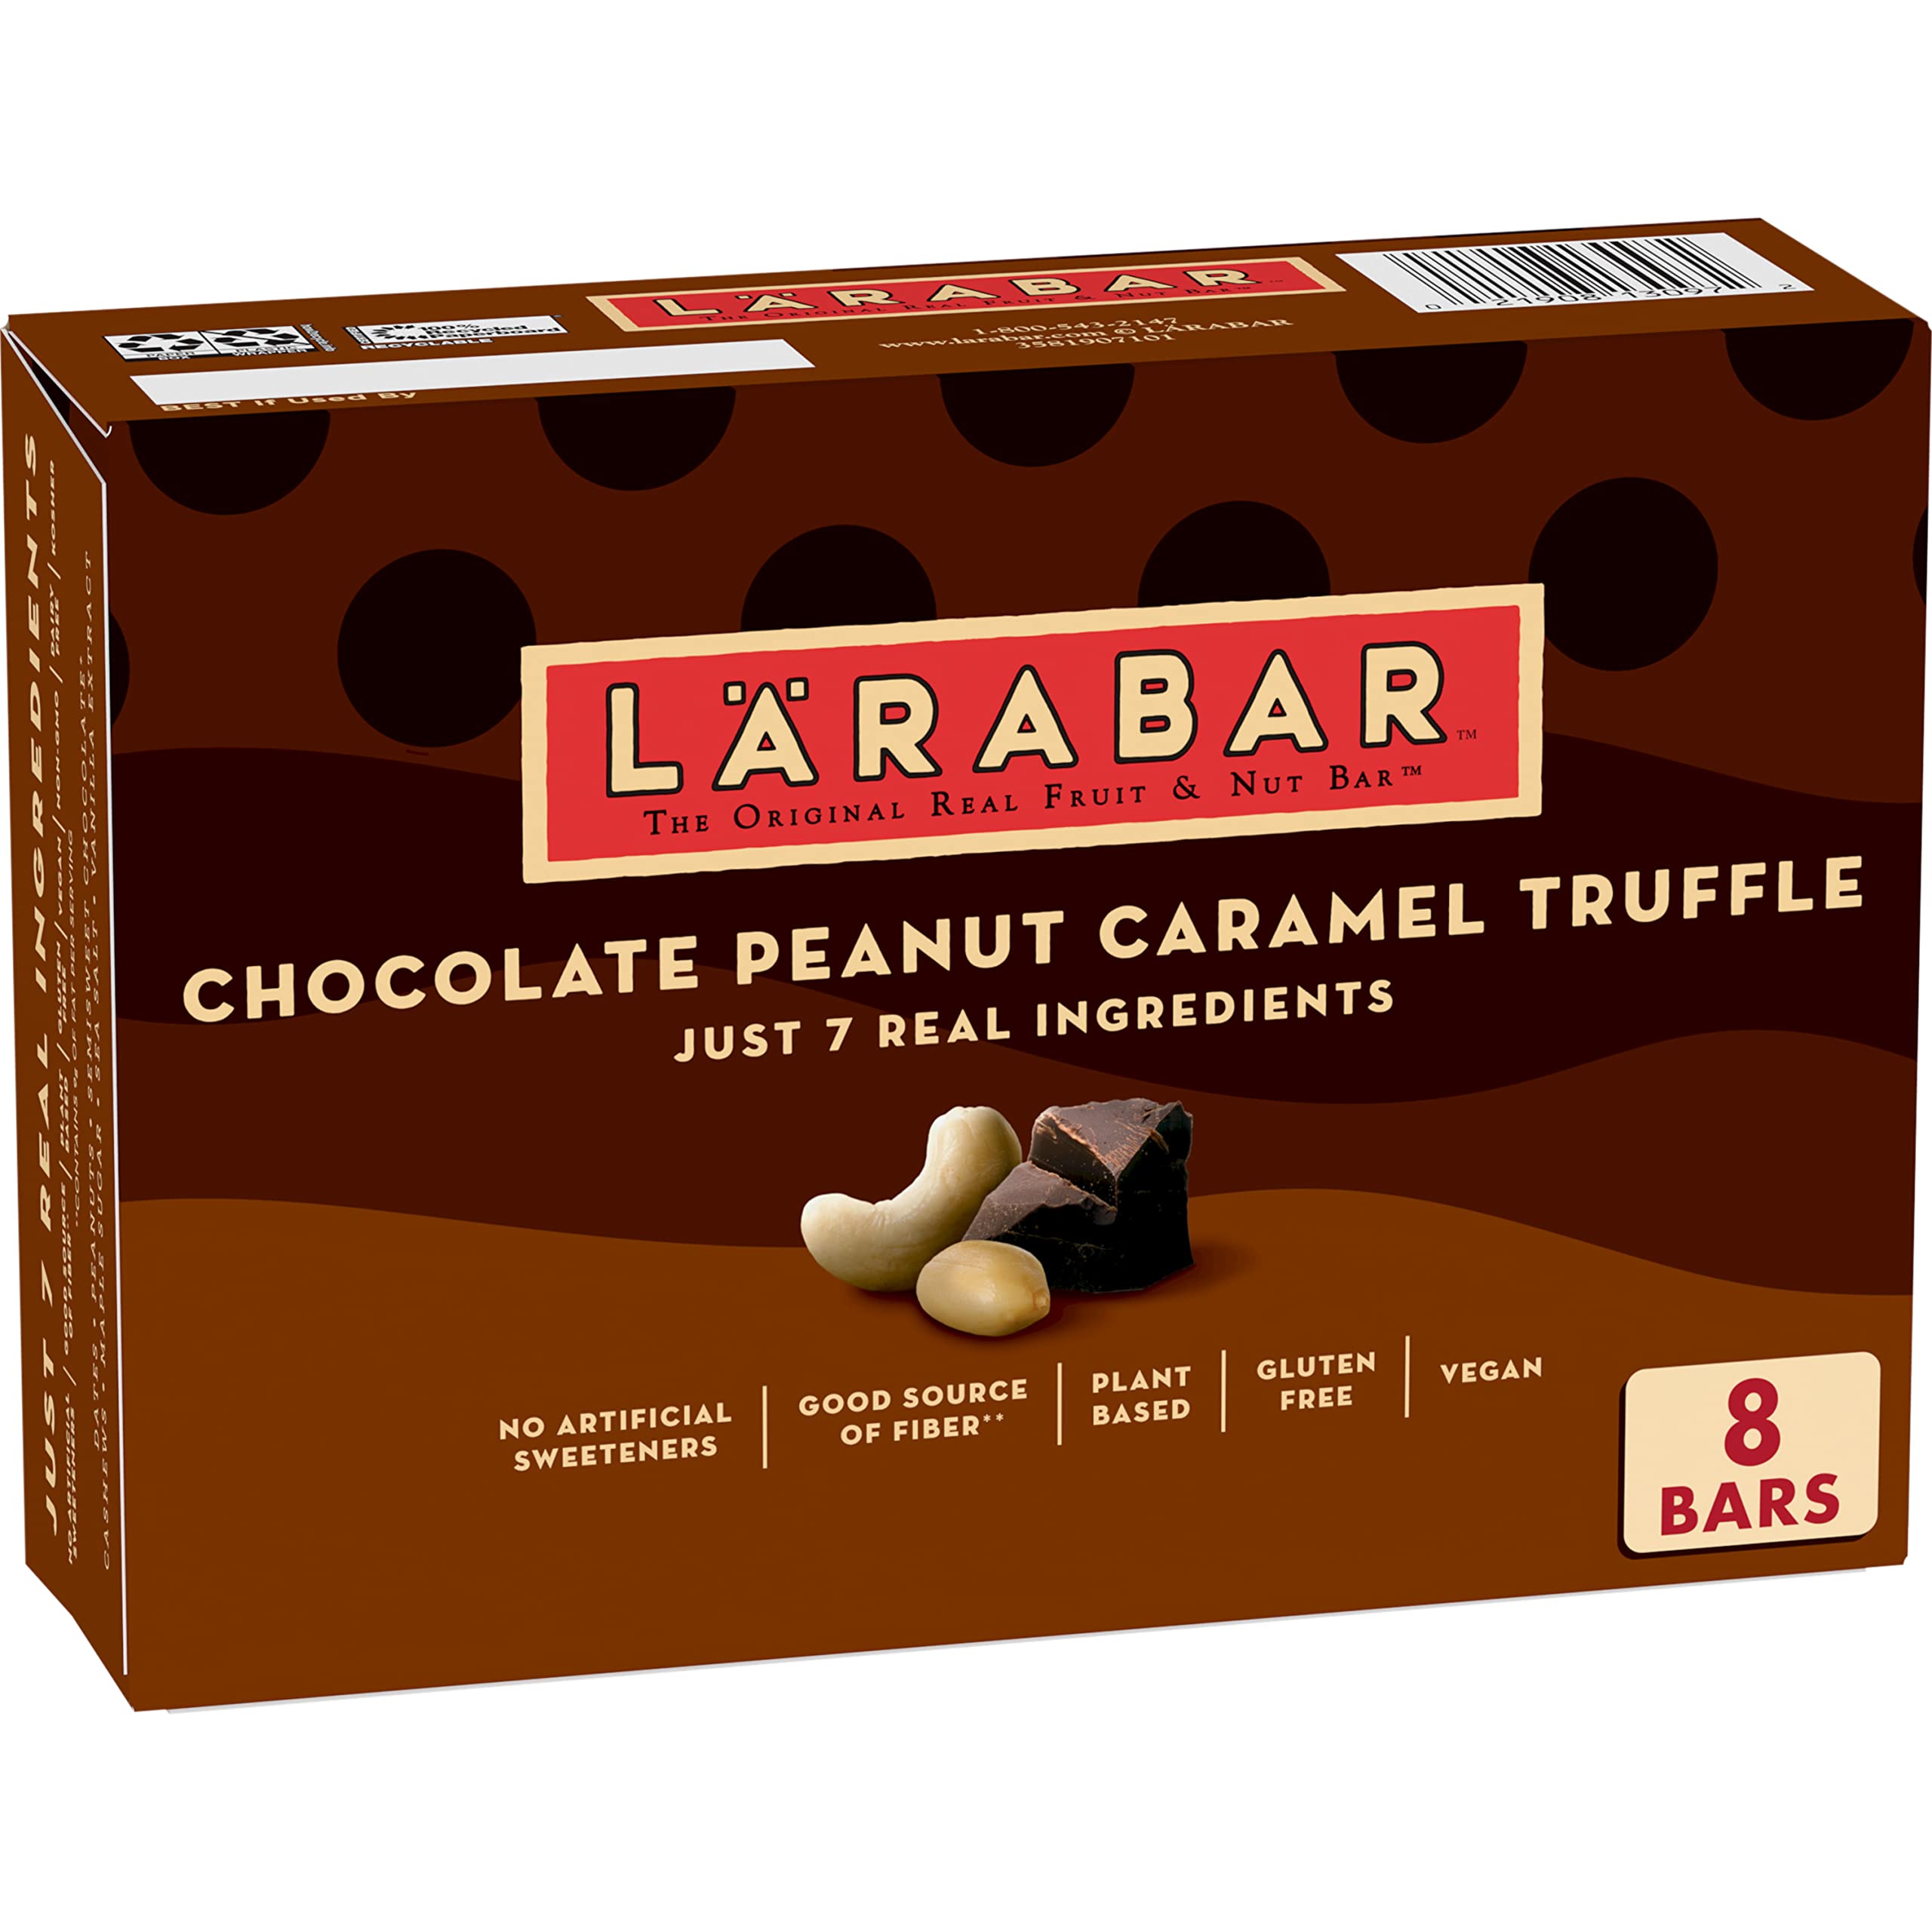 8-Count LÄRABAR Chocolate Peanut Caramel Truffle Gluten Free Vegan Bars $5.74 w/ S&S+ Free Shipping w/ Prime or on $35+